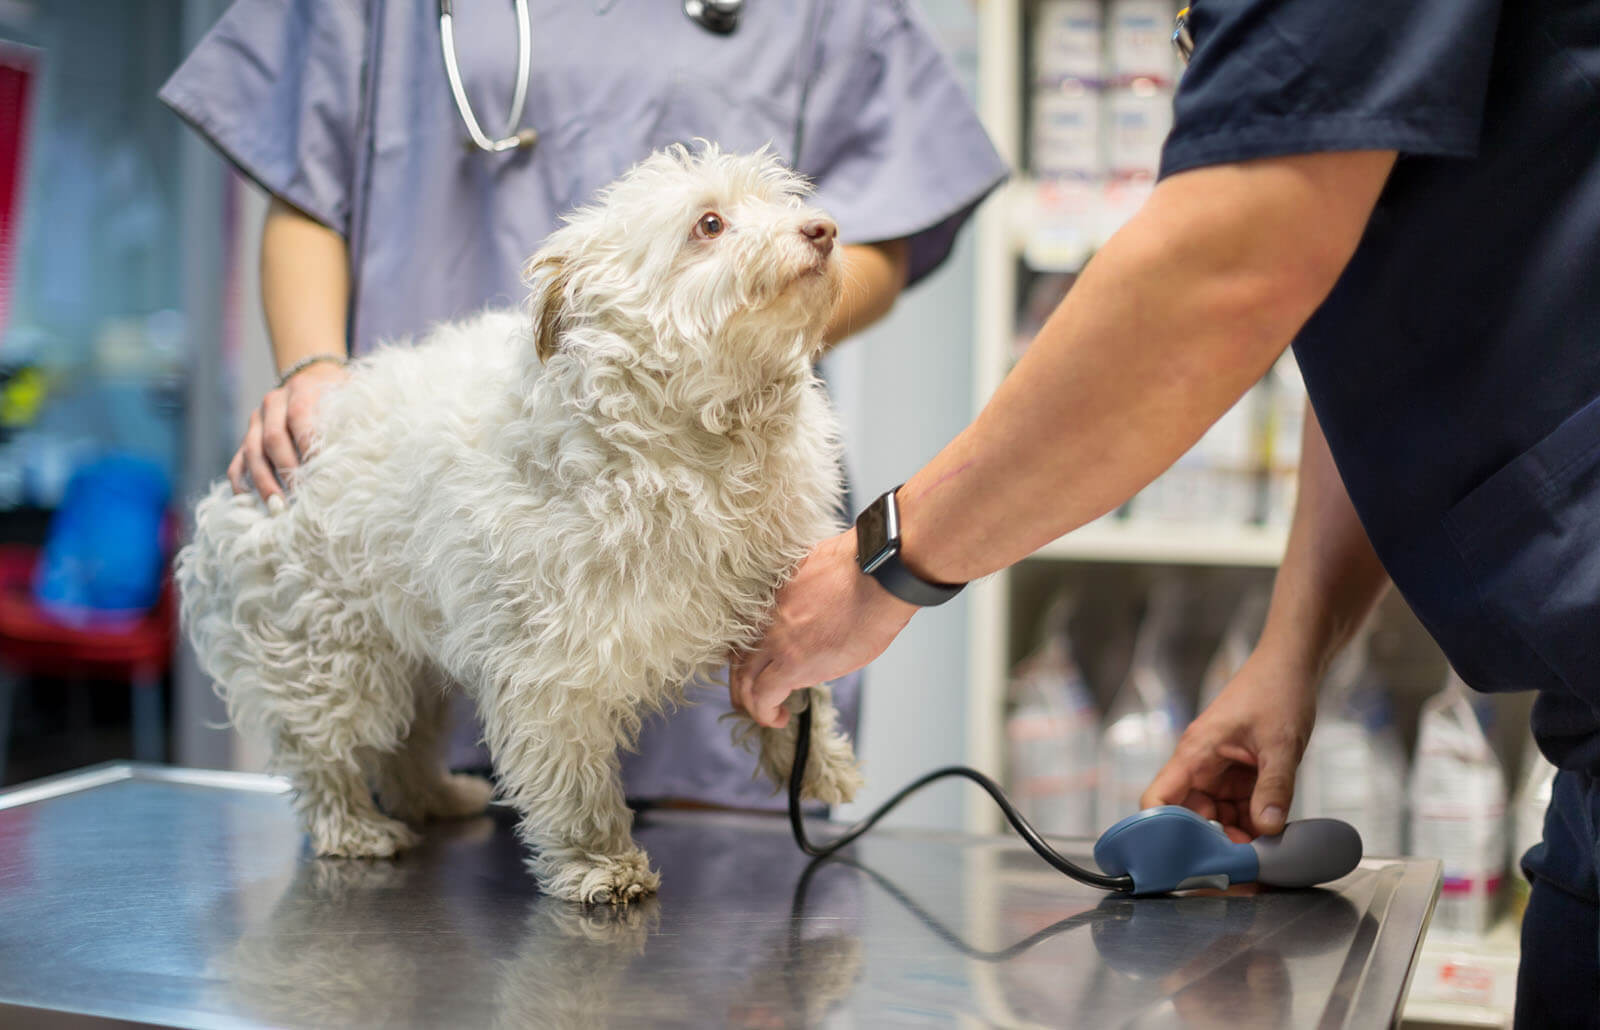 Where do you measure a dog's blood pressure?